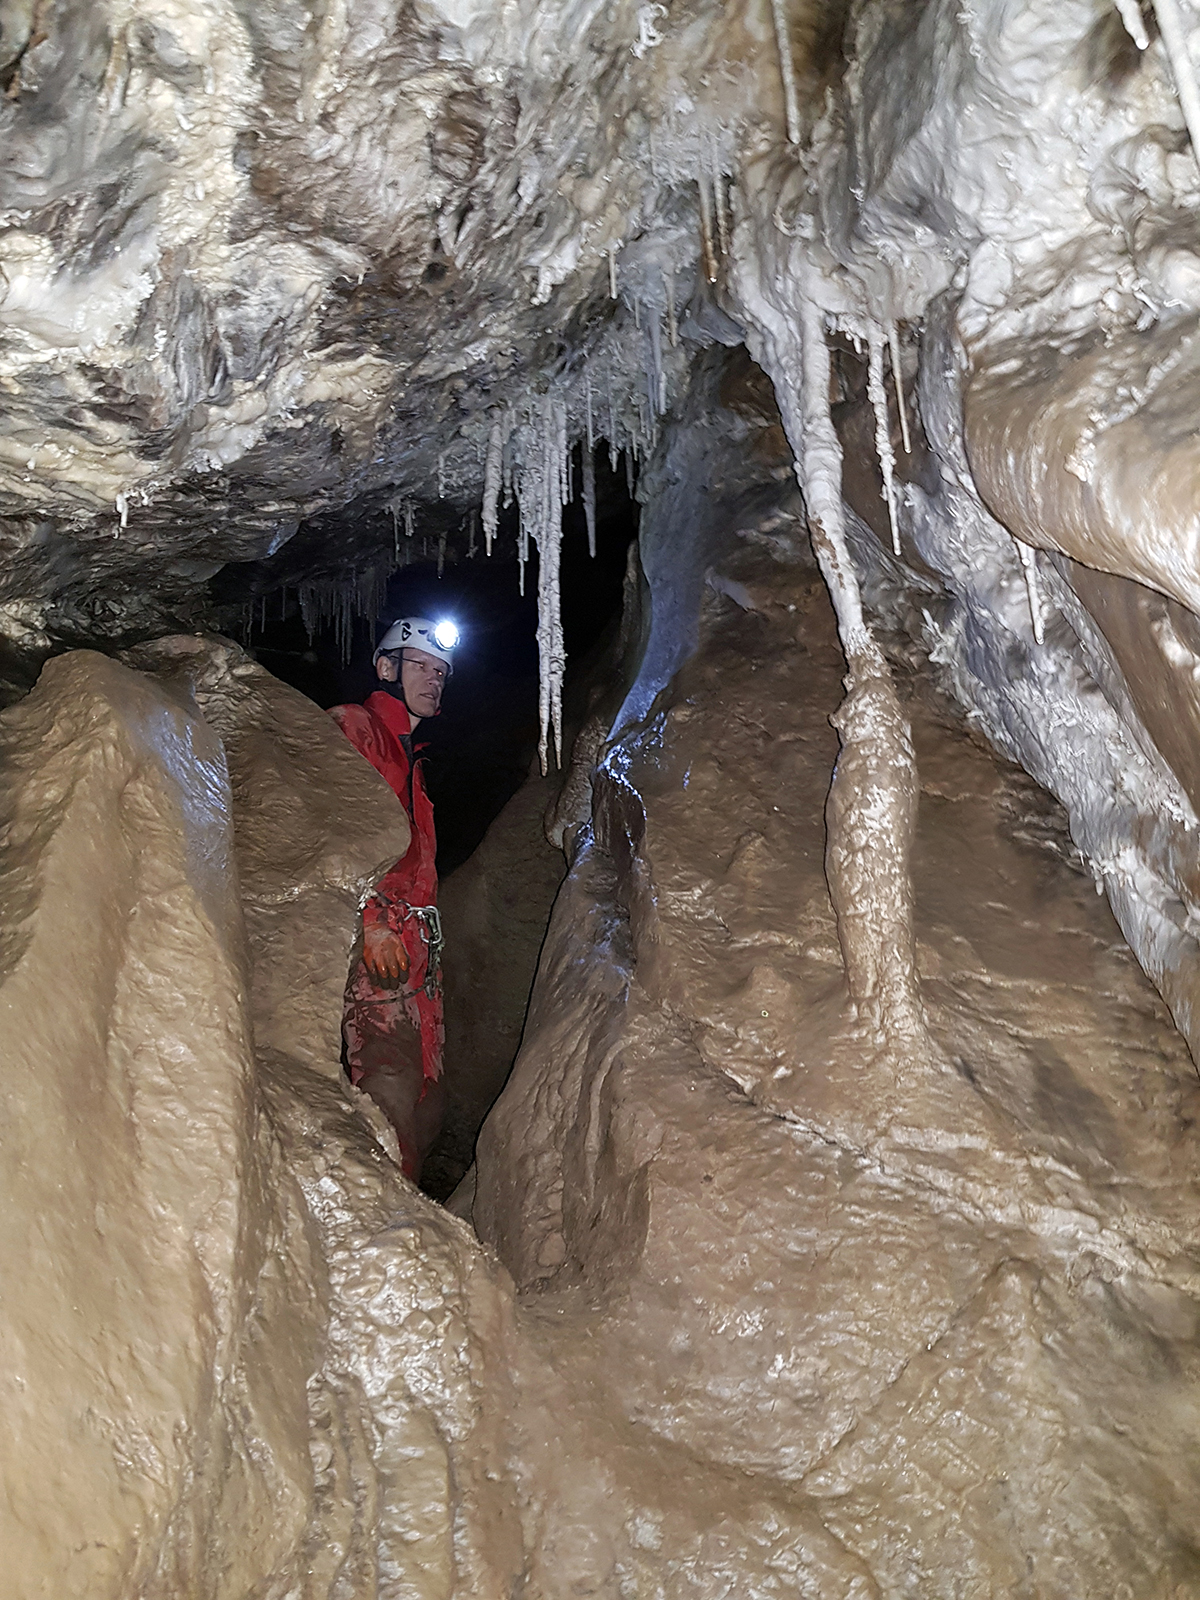 Datenlogger-Messstation "Windkluft" in der Schrattenhöhle, Melchsee-Frutt